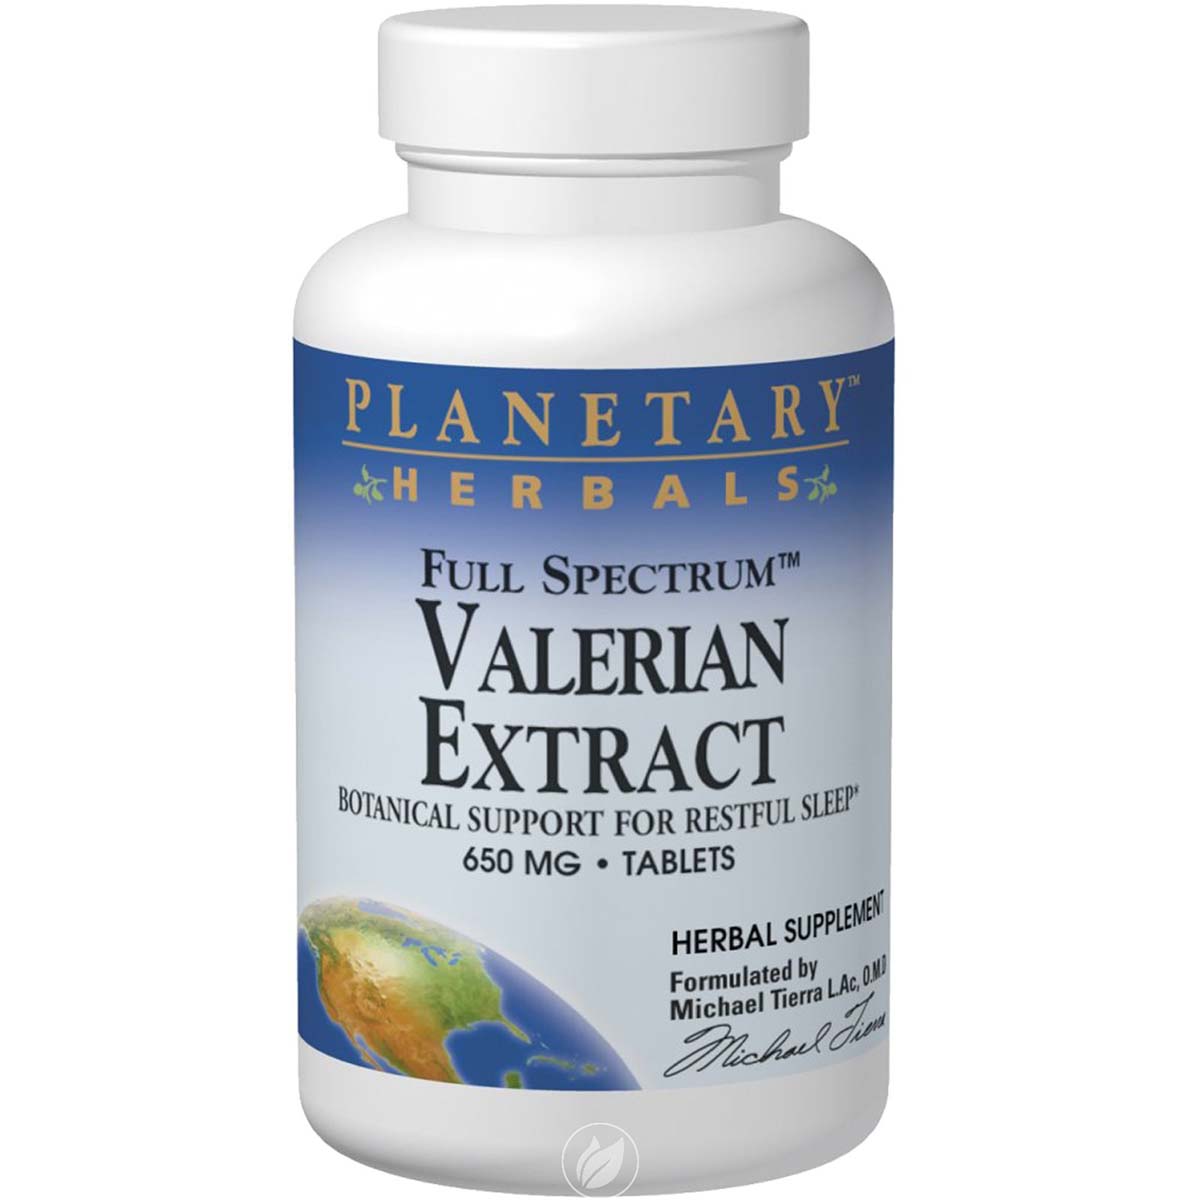 Planetary Herbals Valerian Extract Full Spectrum 60 Tablets 650 mg